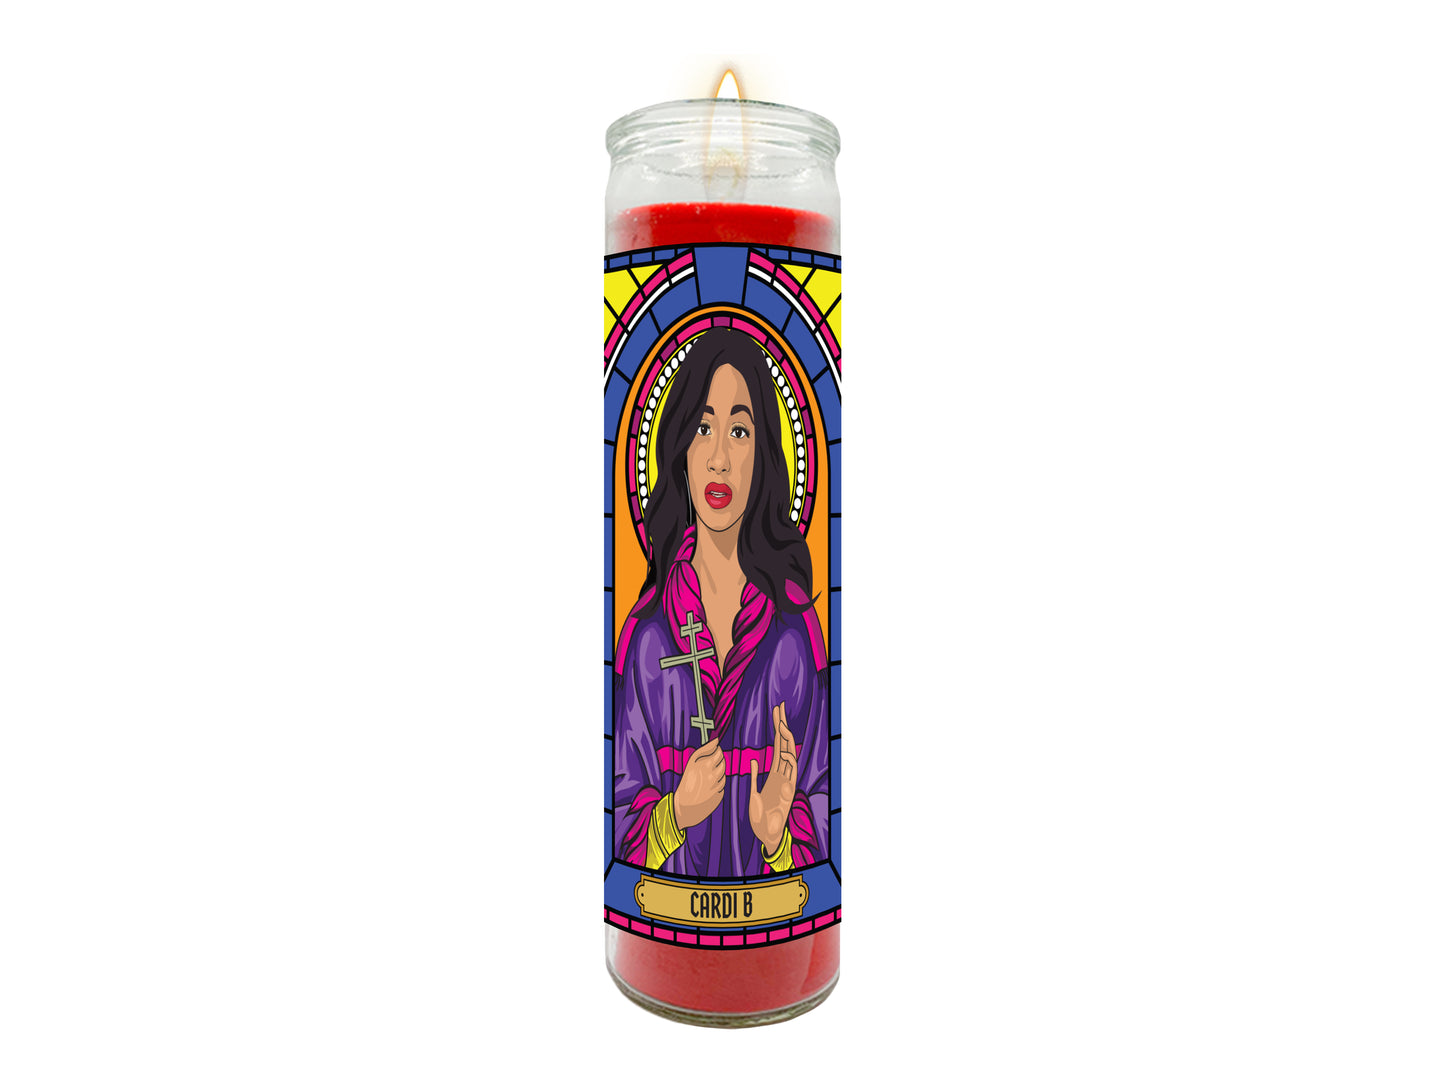 Cardi B Illustrated Prayer Candle